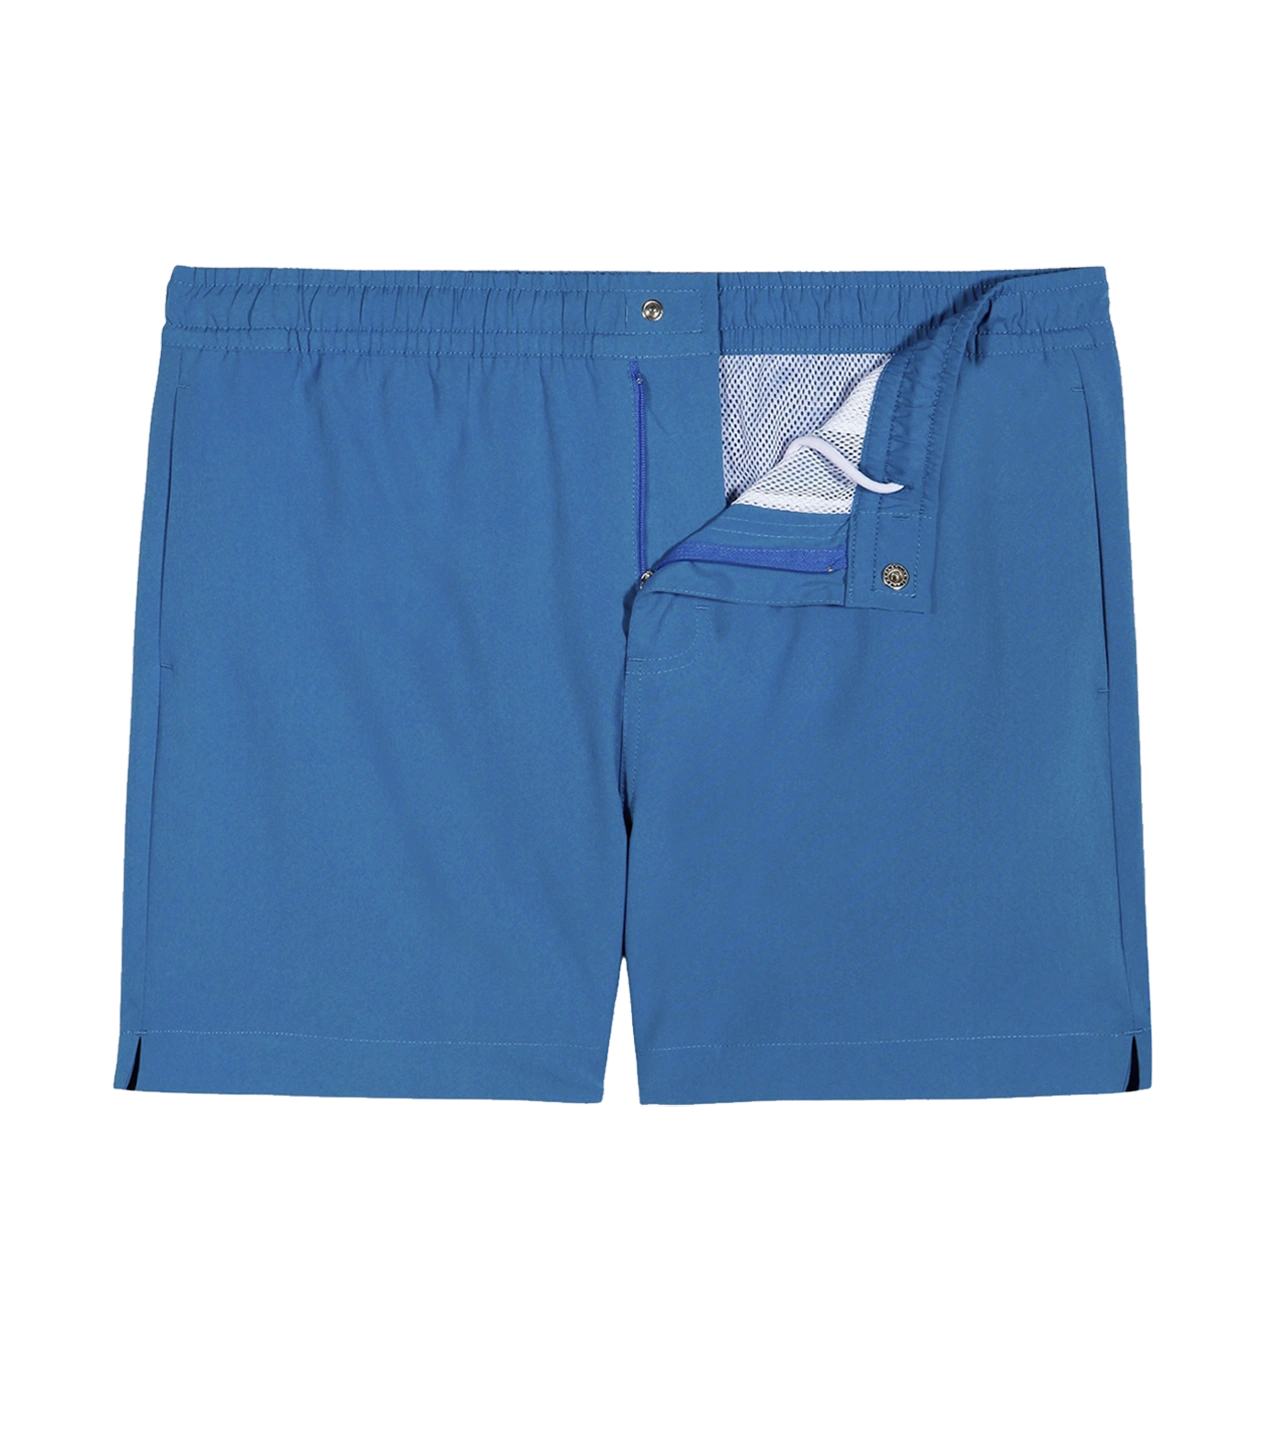 Shell Shorts Indy Blue - Barthelemy